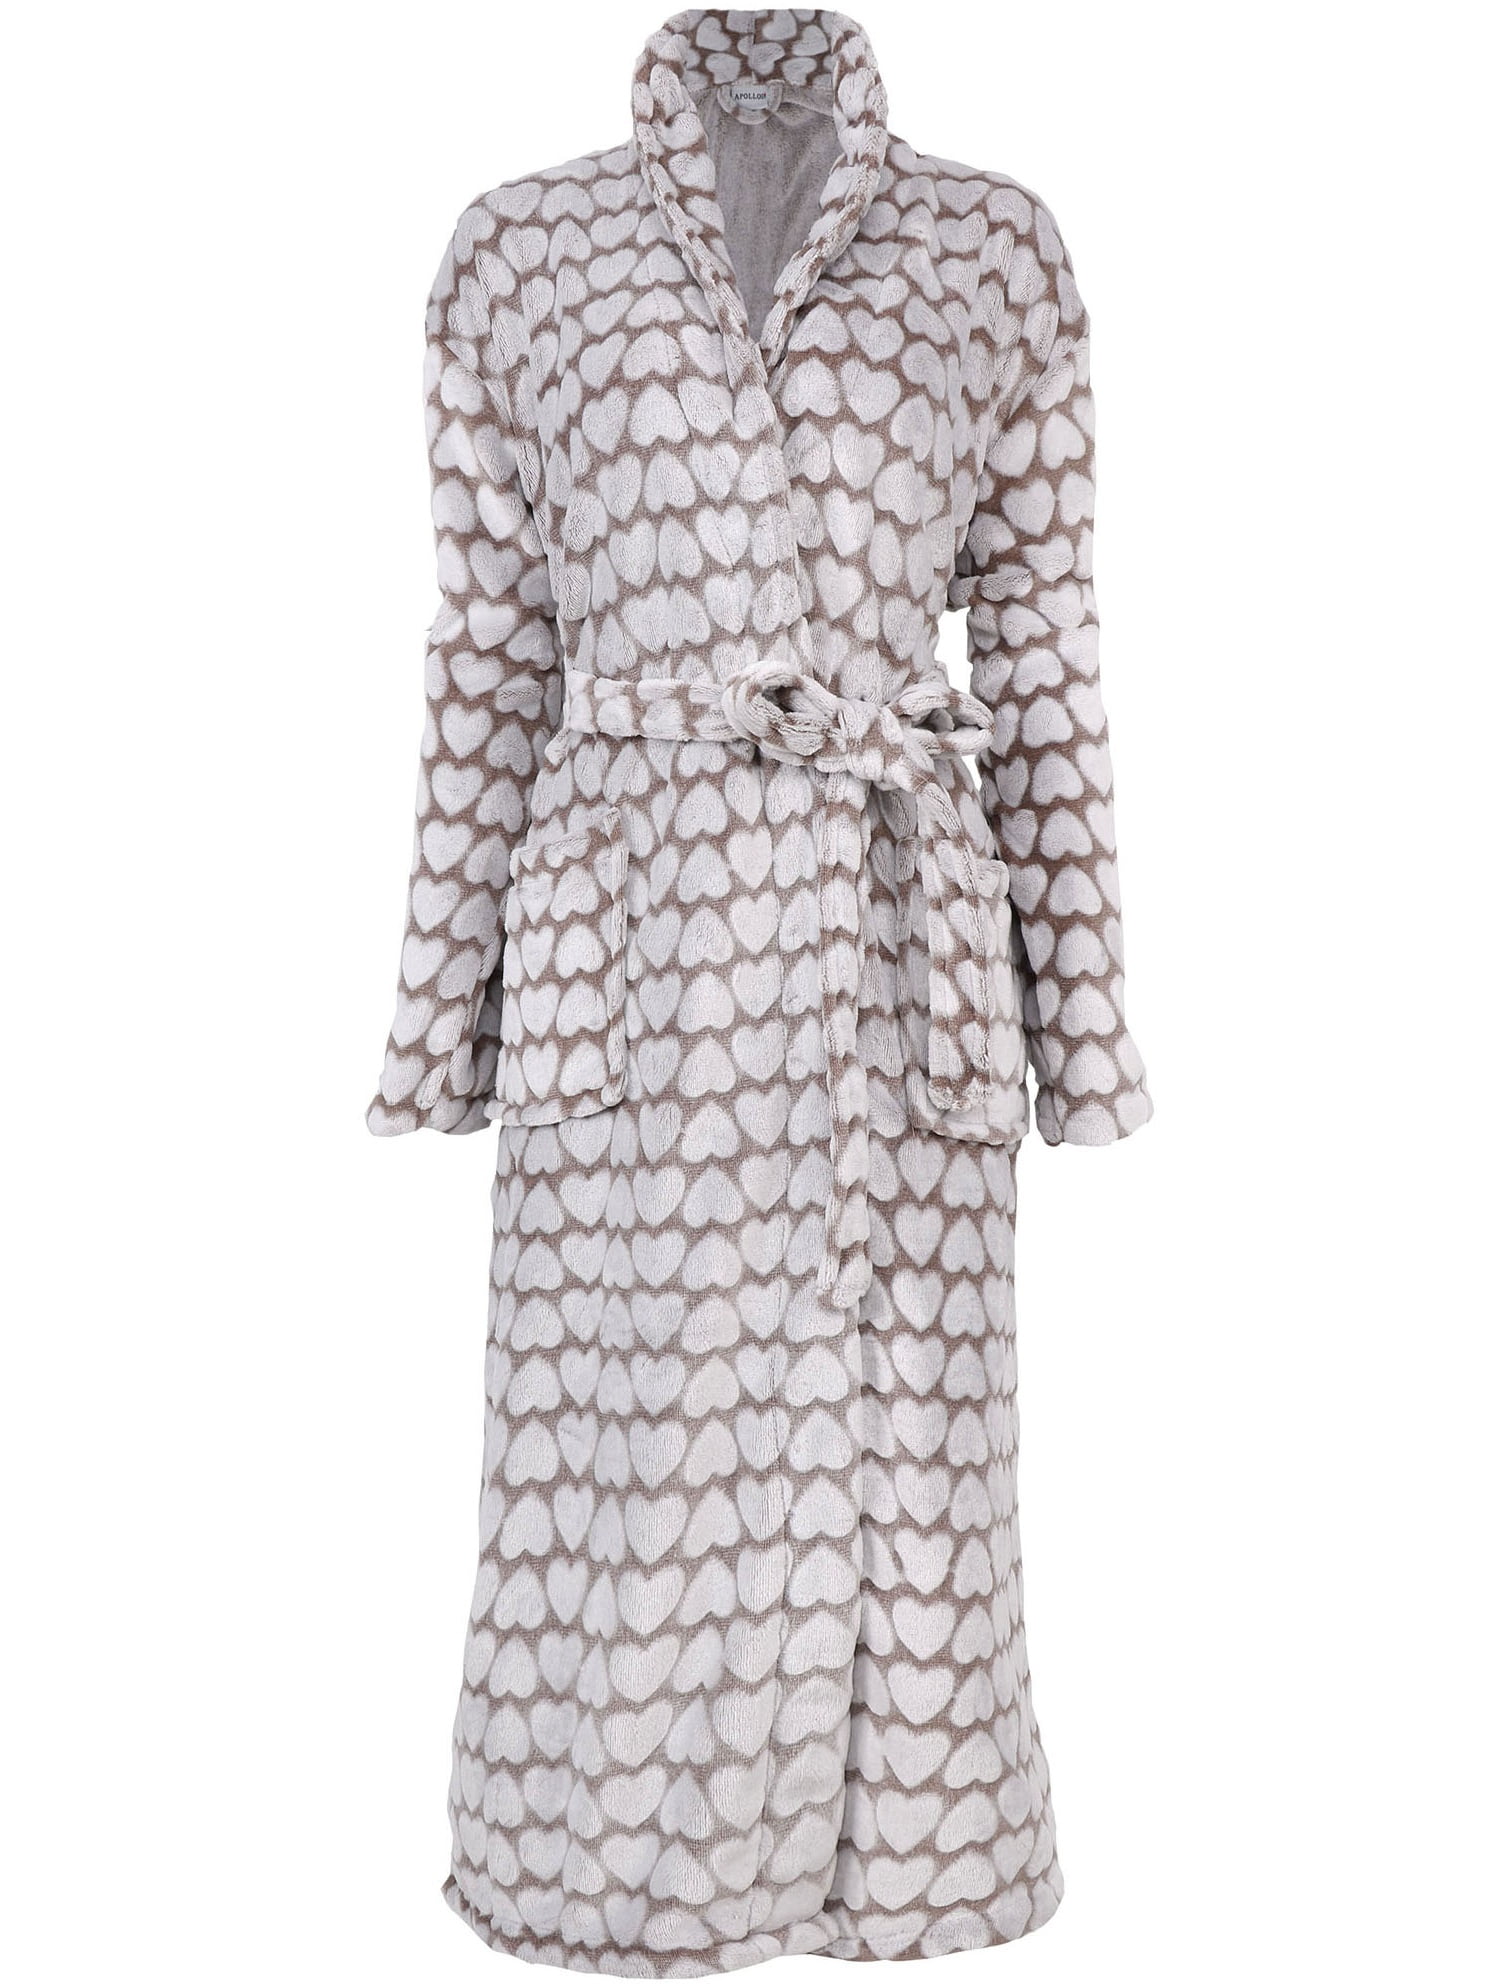 Women's Soft Plush Bathrobe Kimono Robe Sleepwear Nightgown,Grey ...